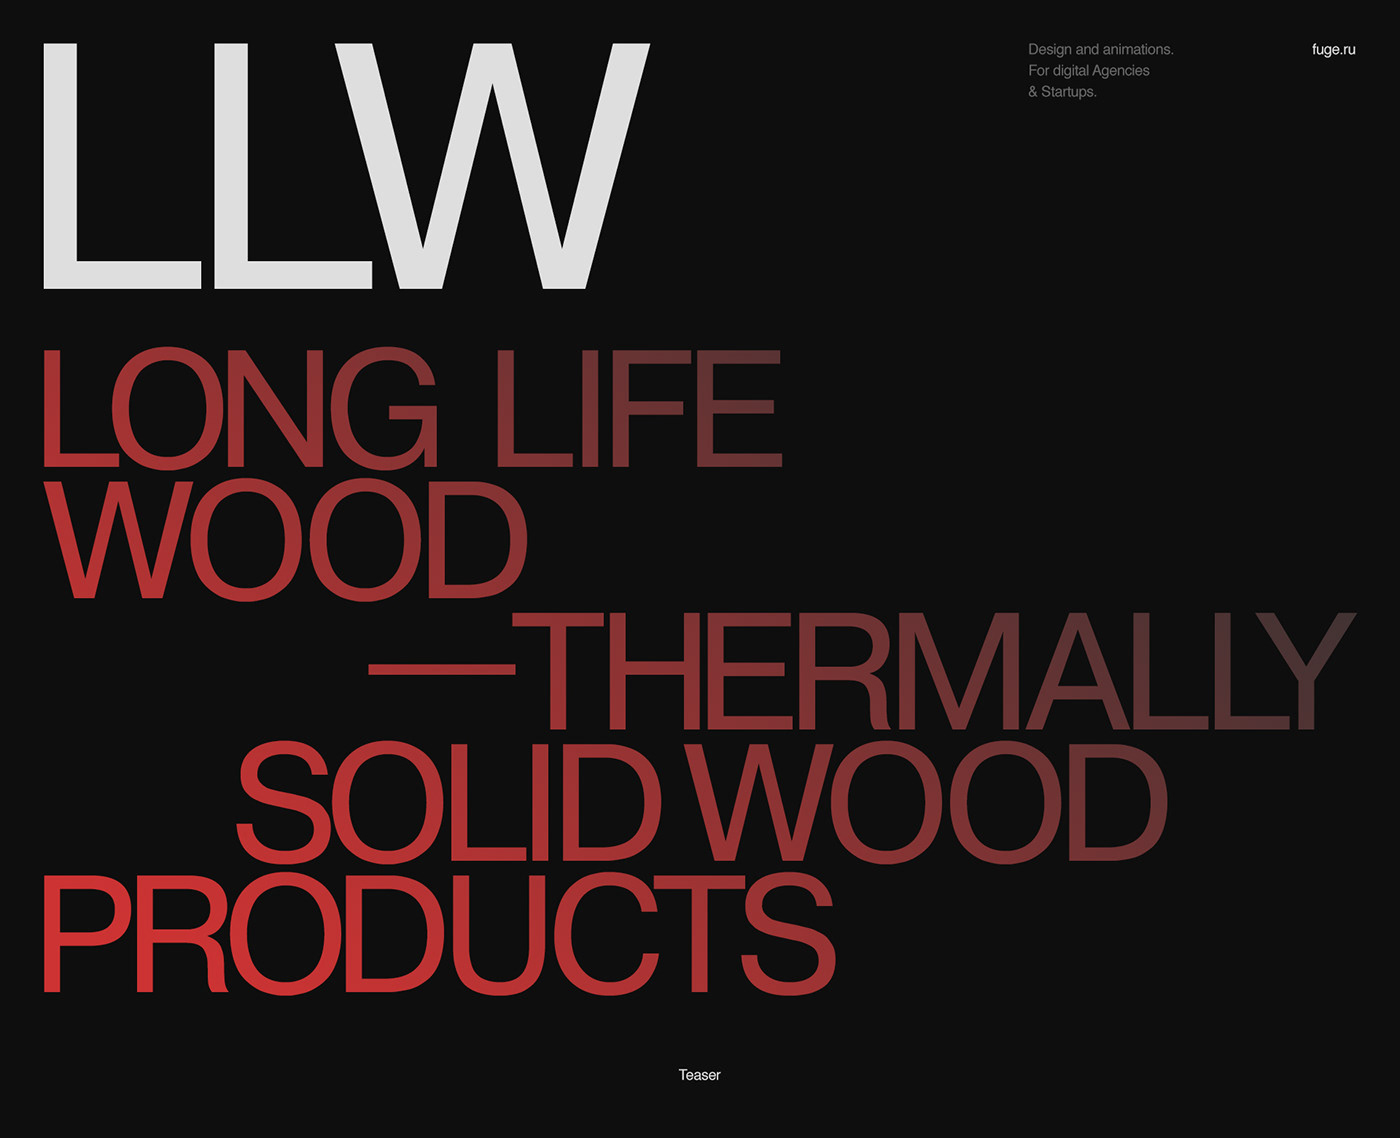 Web Website promo wood catalog gallery minimal guidline black red White